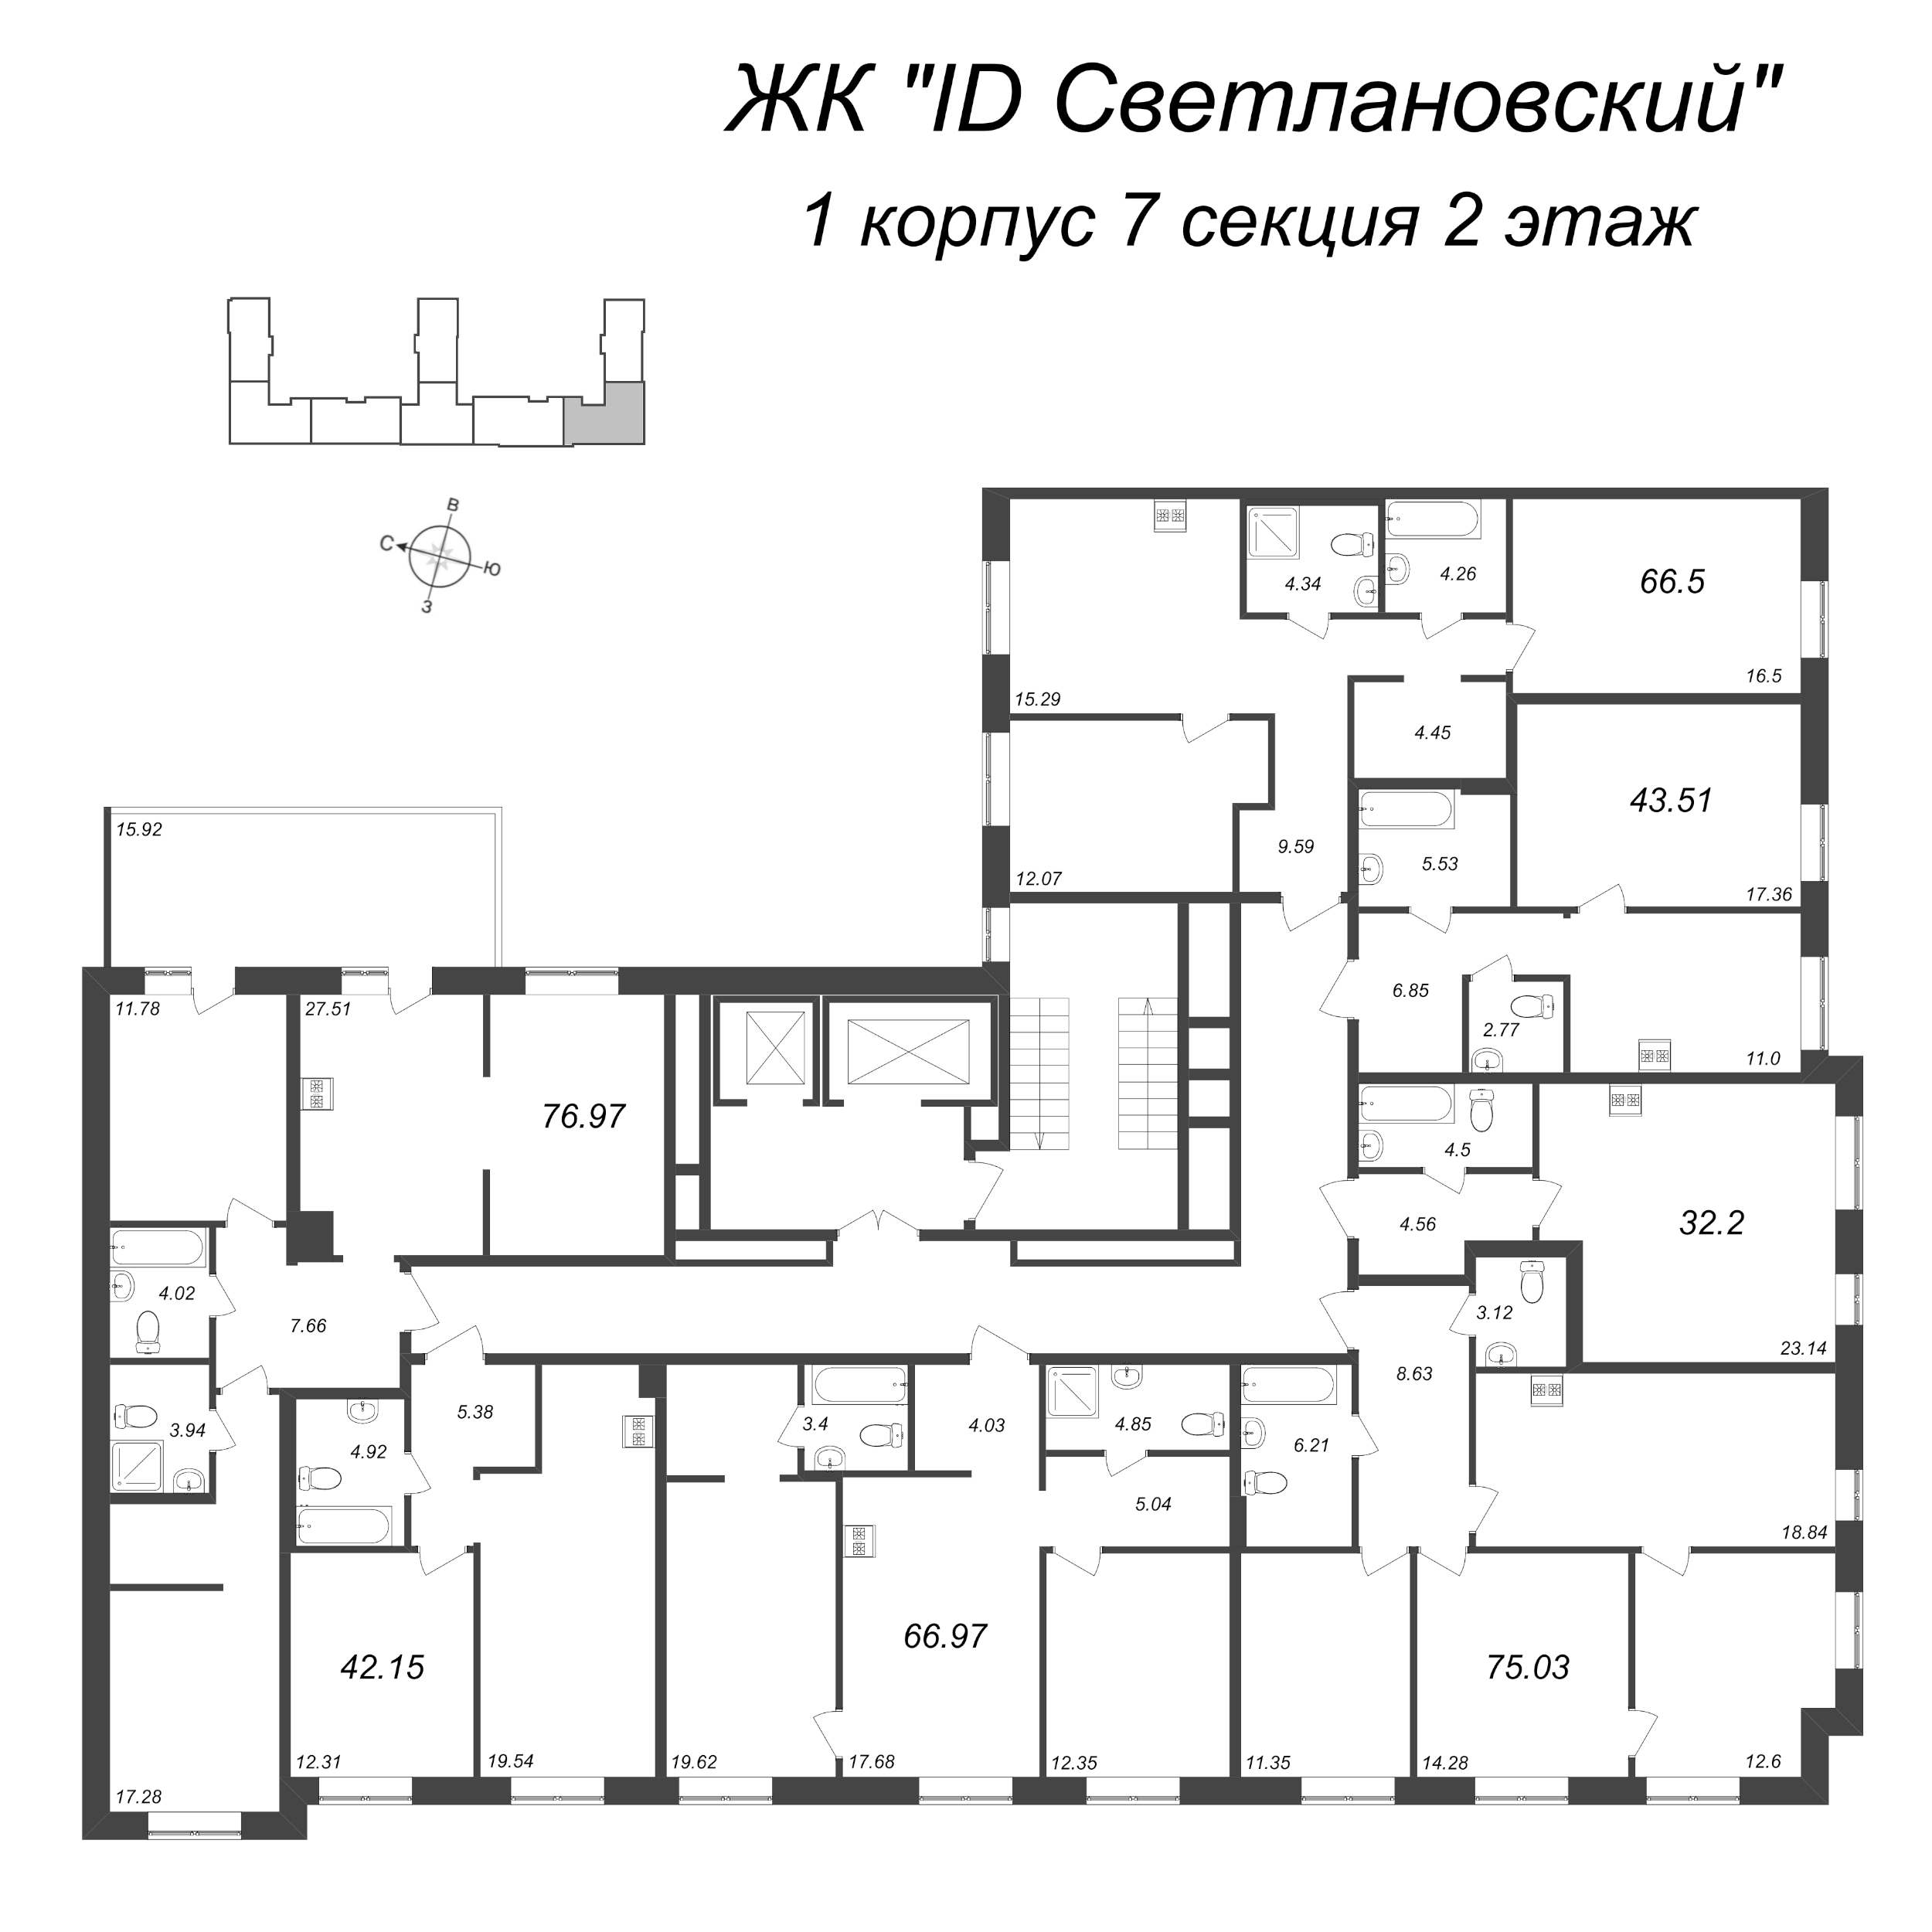 4-комнатная (Евро) квартира, 75.03 м² - планировка этажа